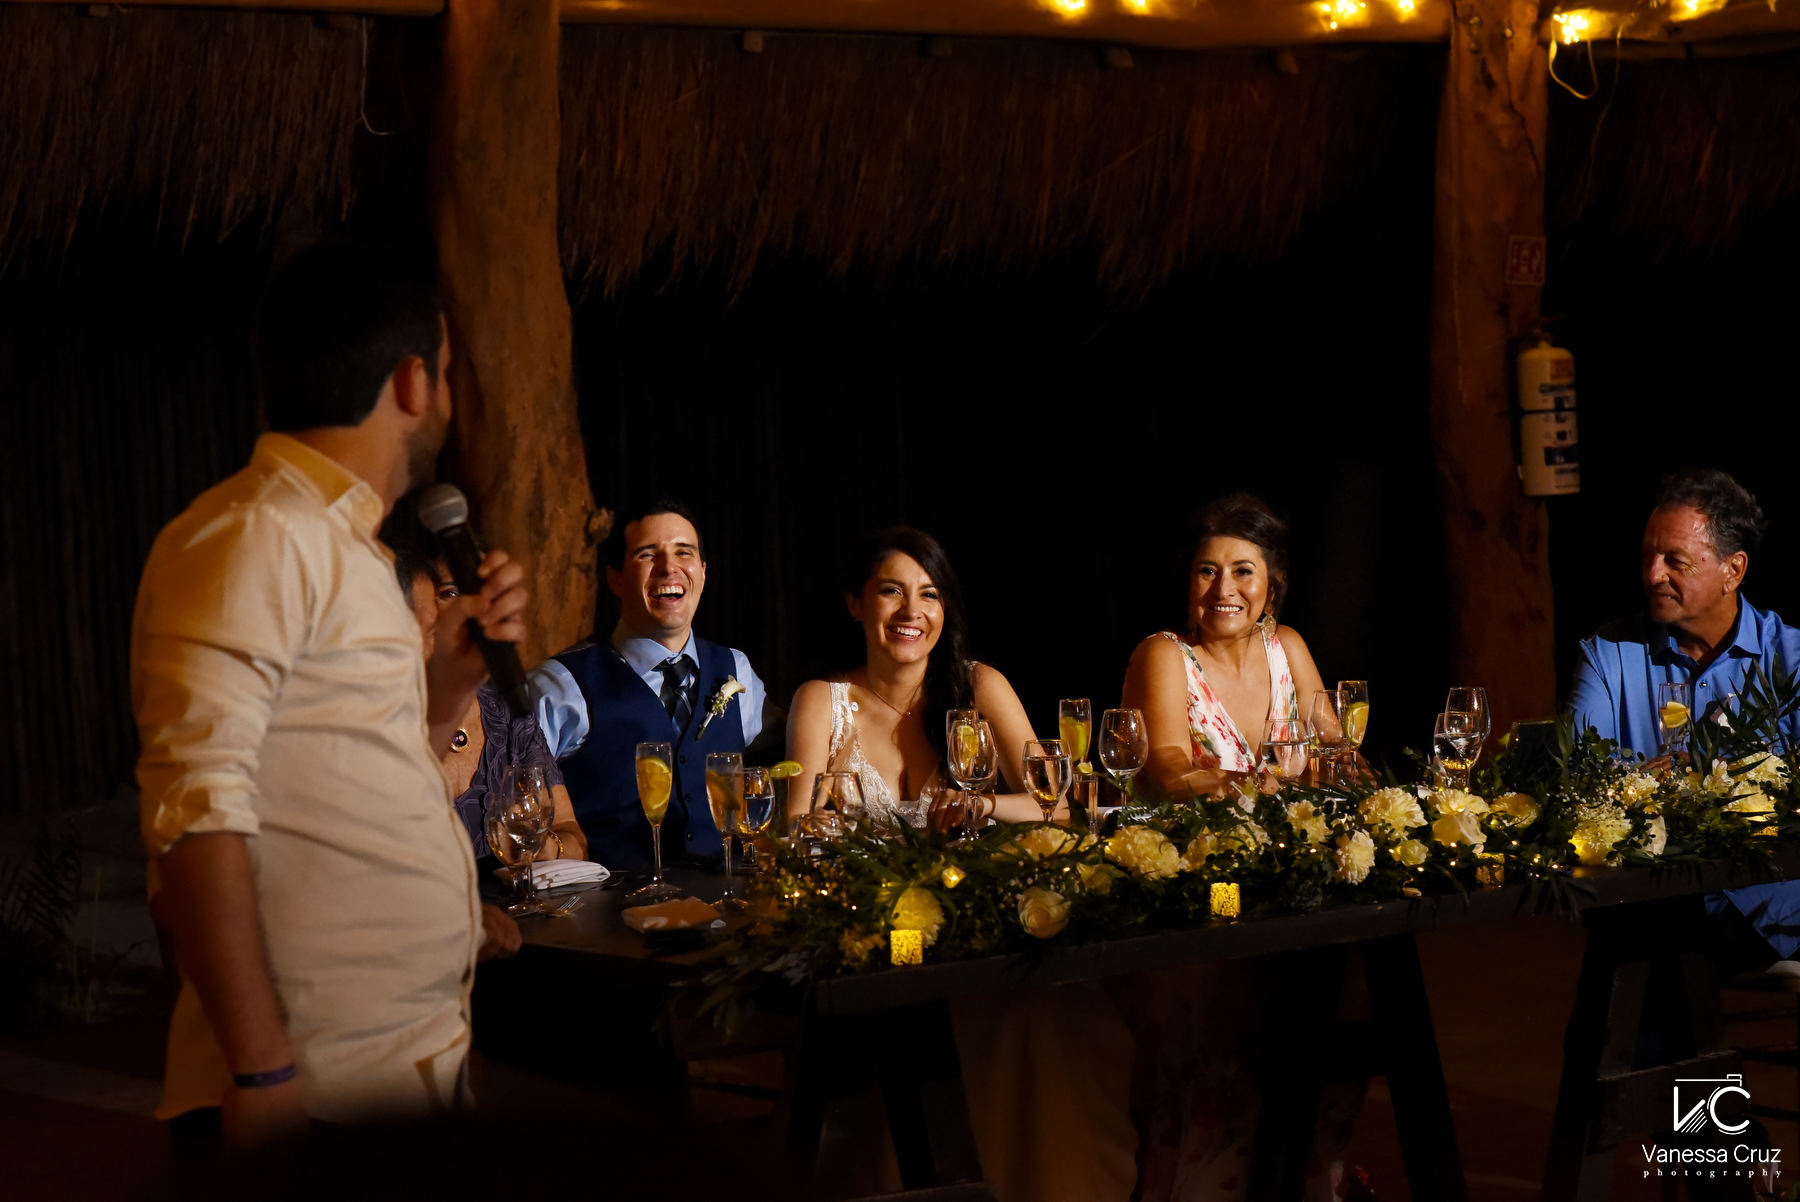 Wedding toast bride and groom smiling destination wedding Playa del Carmen Mexico